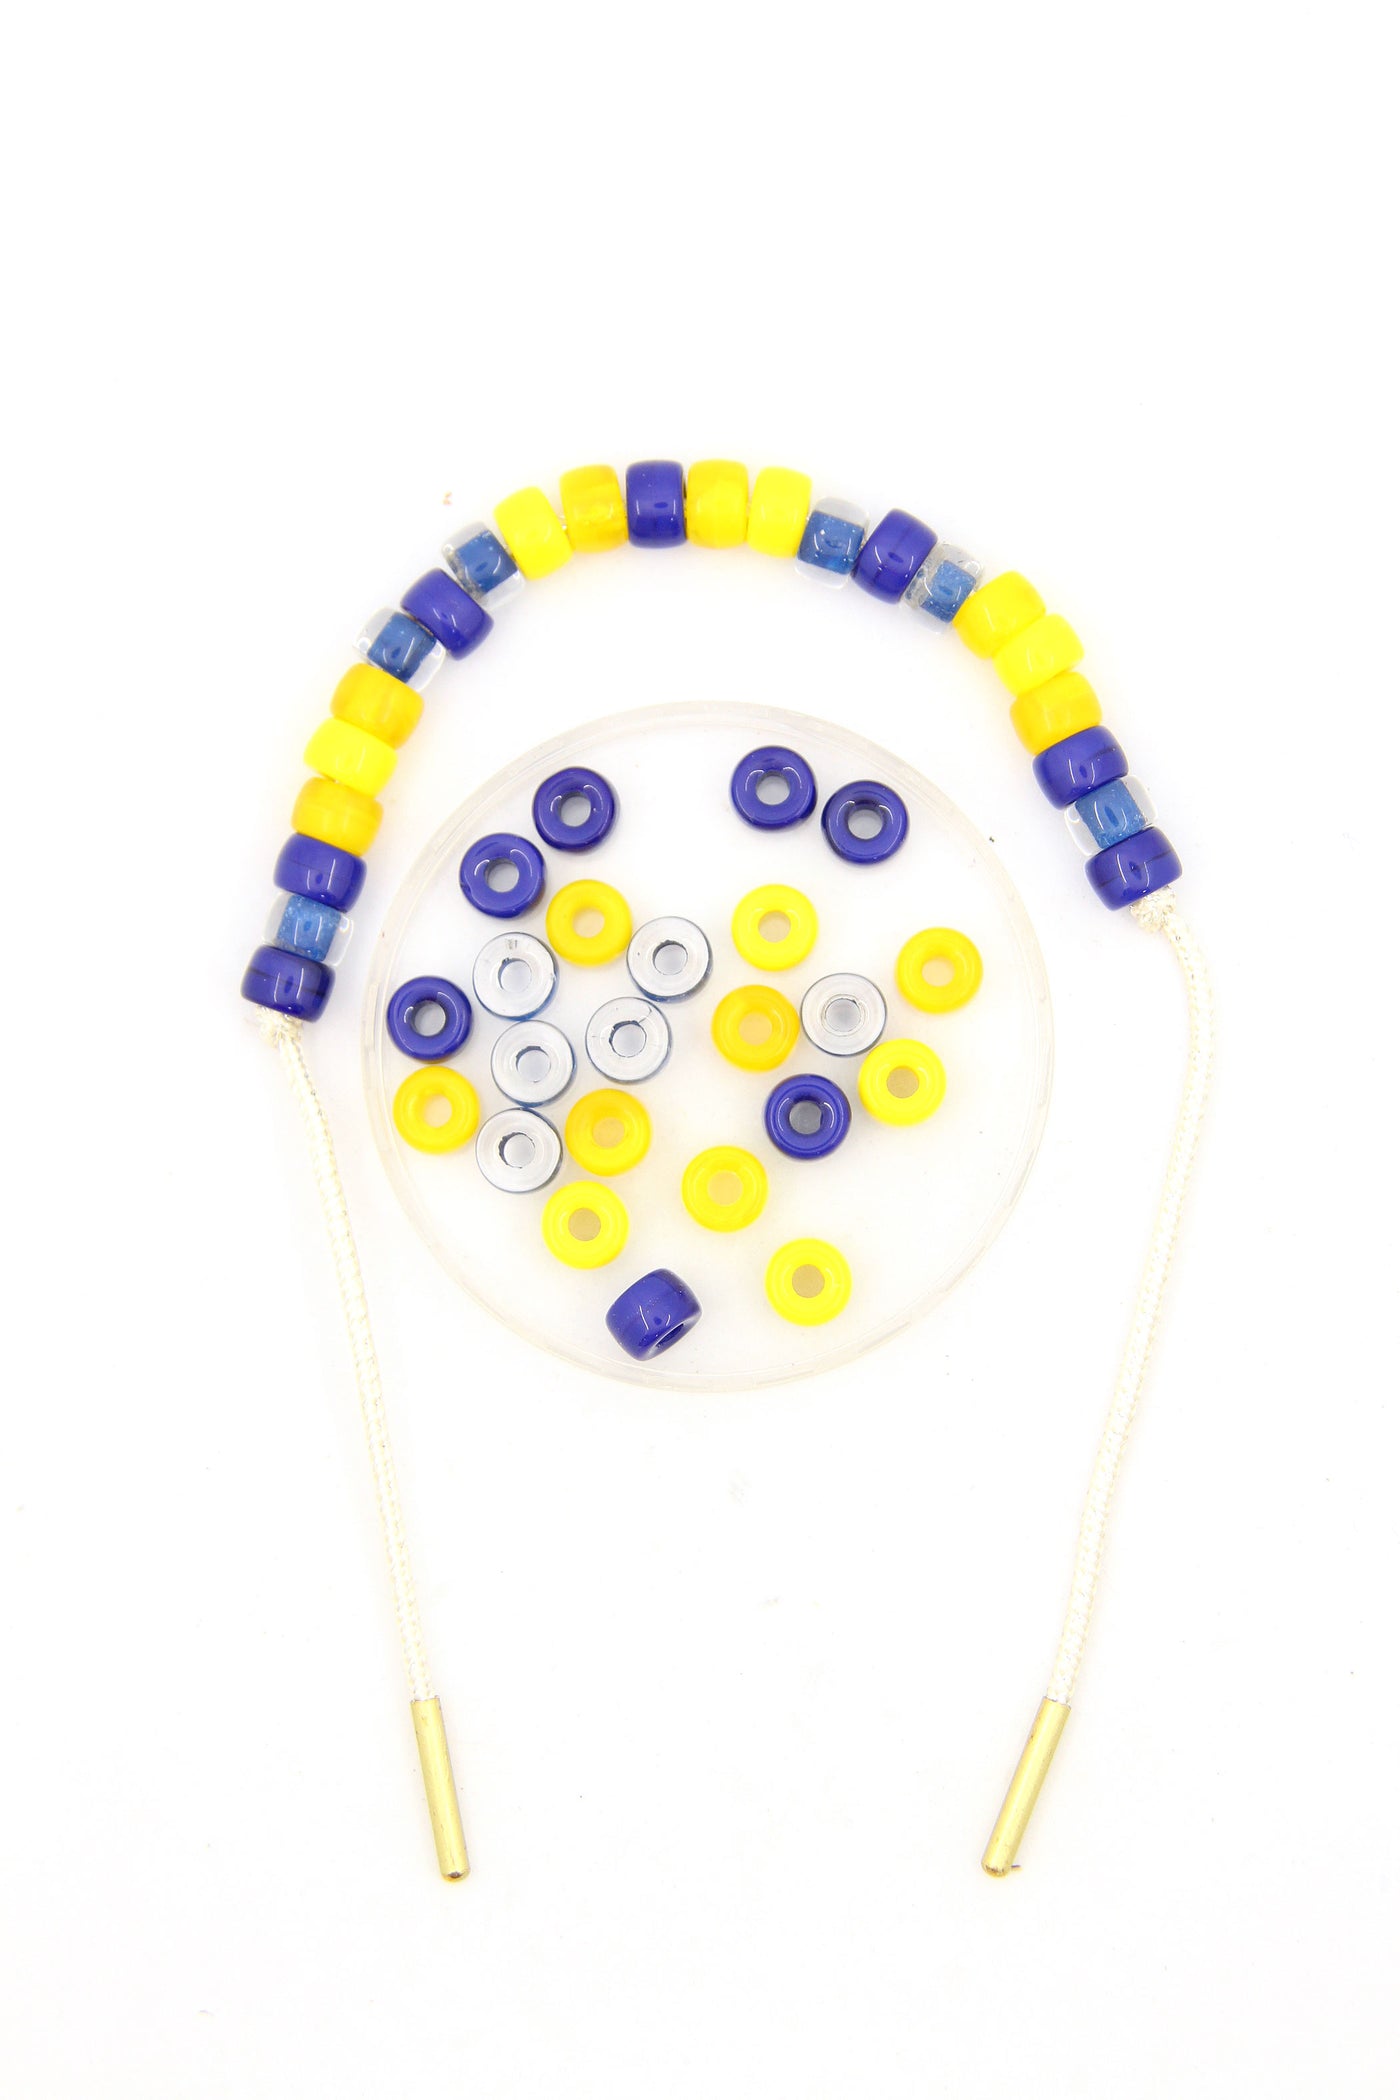 Peace In Ukraine Roller Bead DIY Tie On Bracelet Kit, Blue & Yellow Czech Glass Pony Beads + Lurex Cord